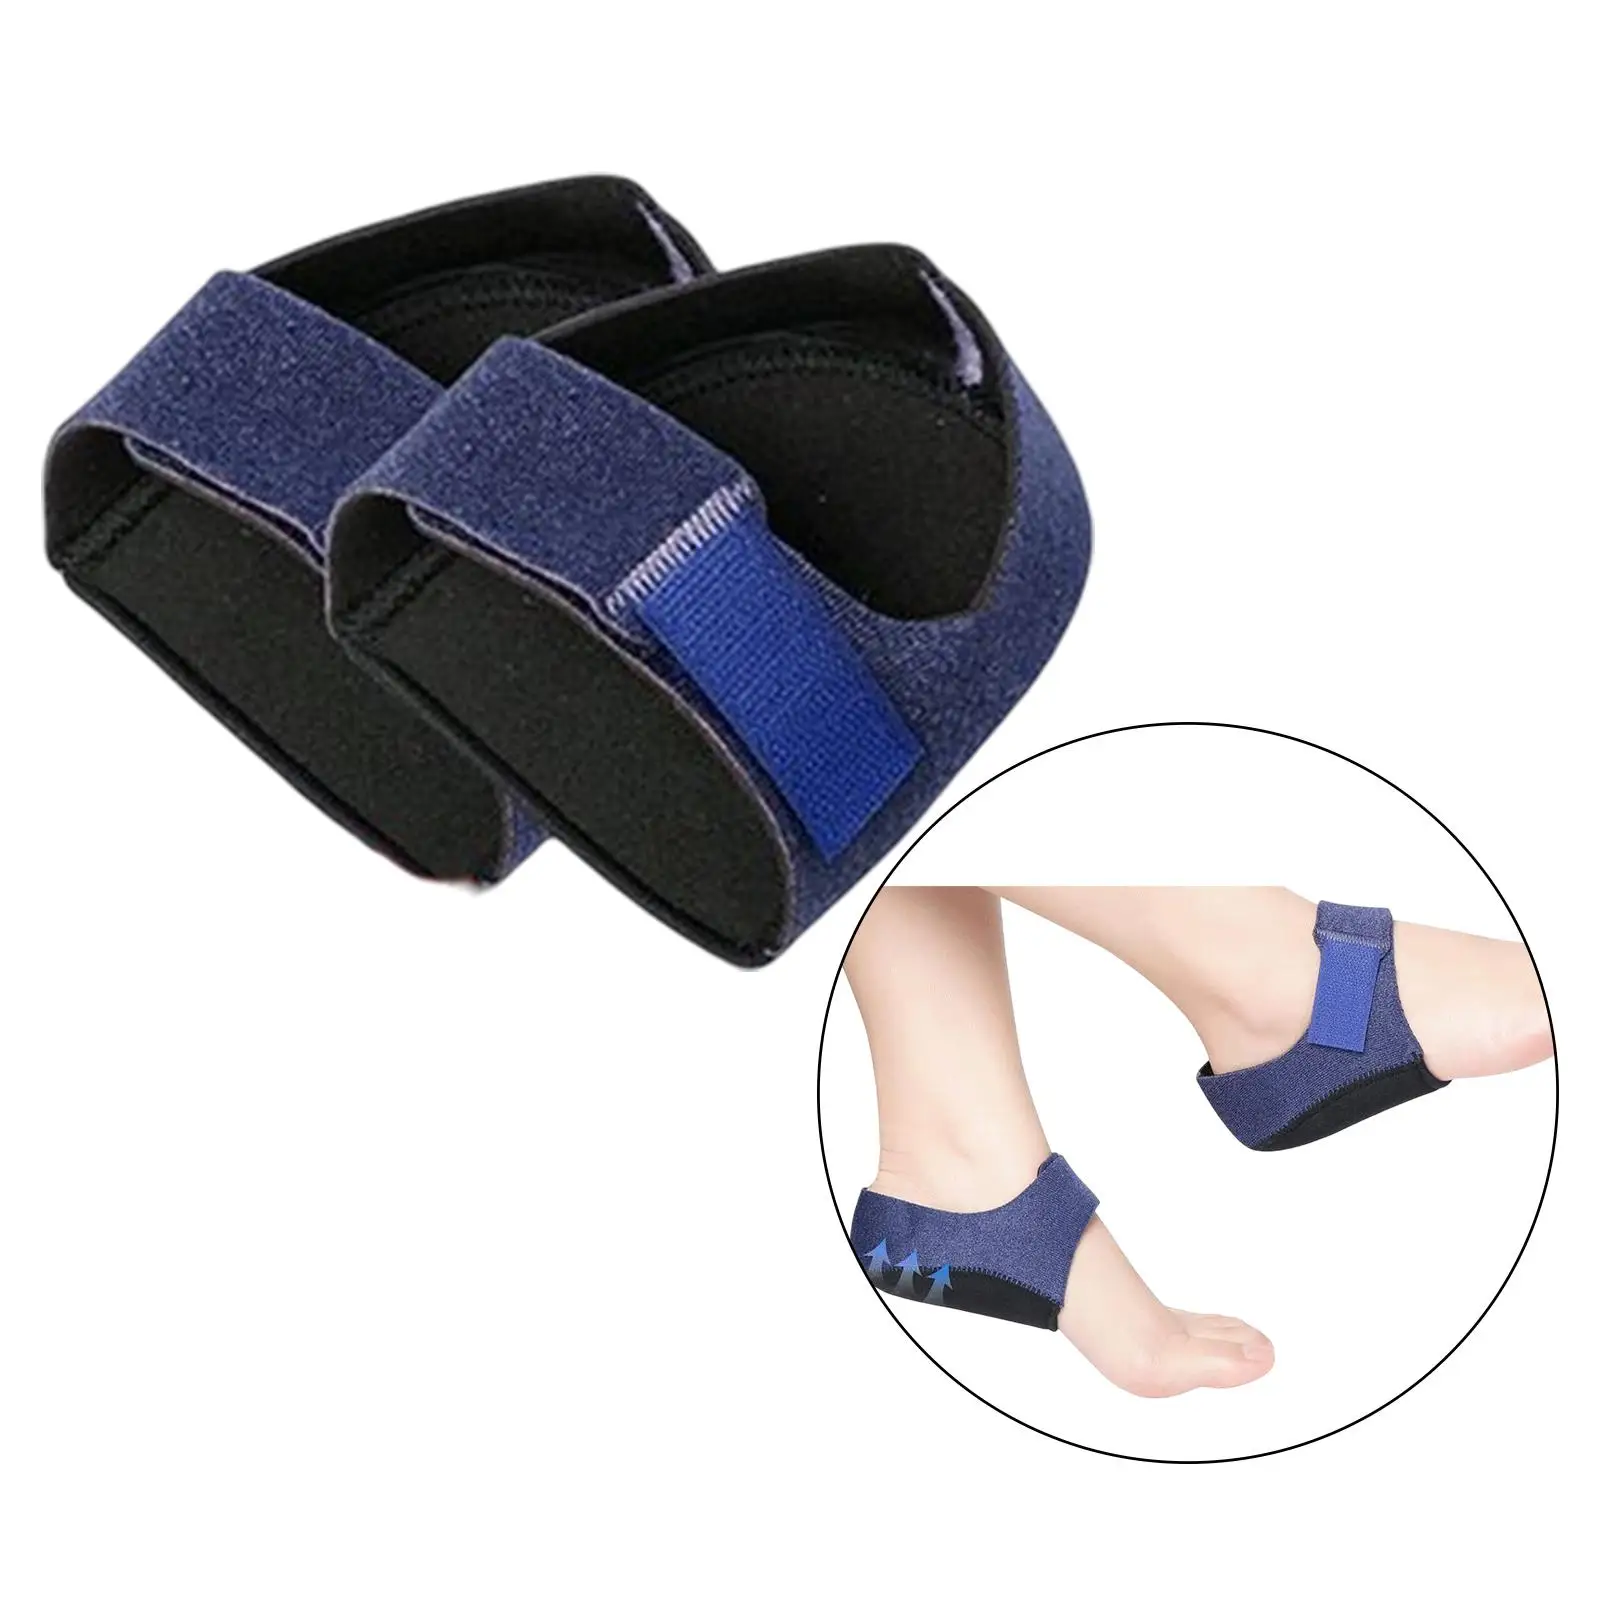 Silicone Heel Protector Plantar Fasciitis Inserts Cushion Cracked feet skins cares Unisex